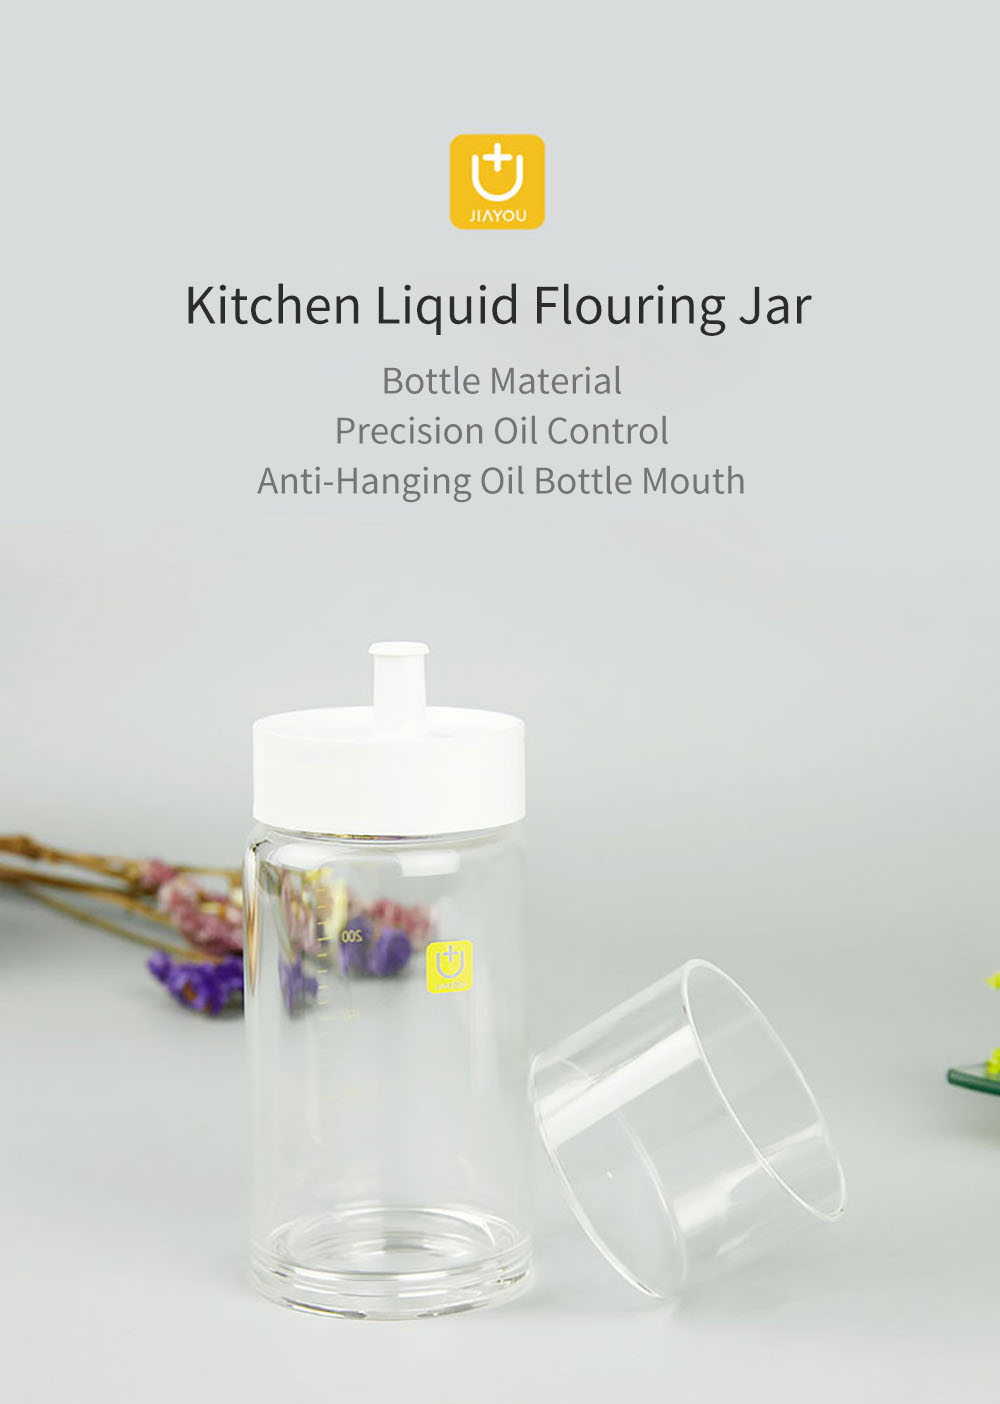 JIAYOU-Kitchen-Flavouring-Tool-Precision-Oil-Control-Anti-Hanging-Oil-Kitchen-Seasoning-Tank-Oil-Tan-1548632-1